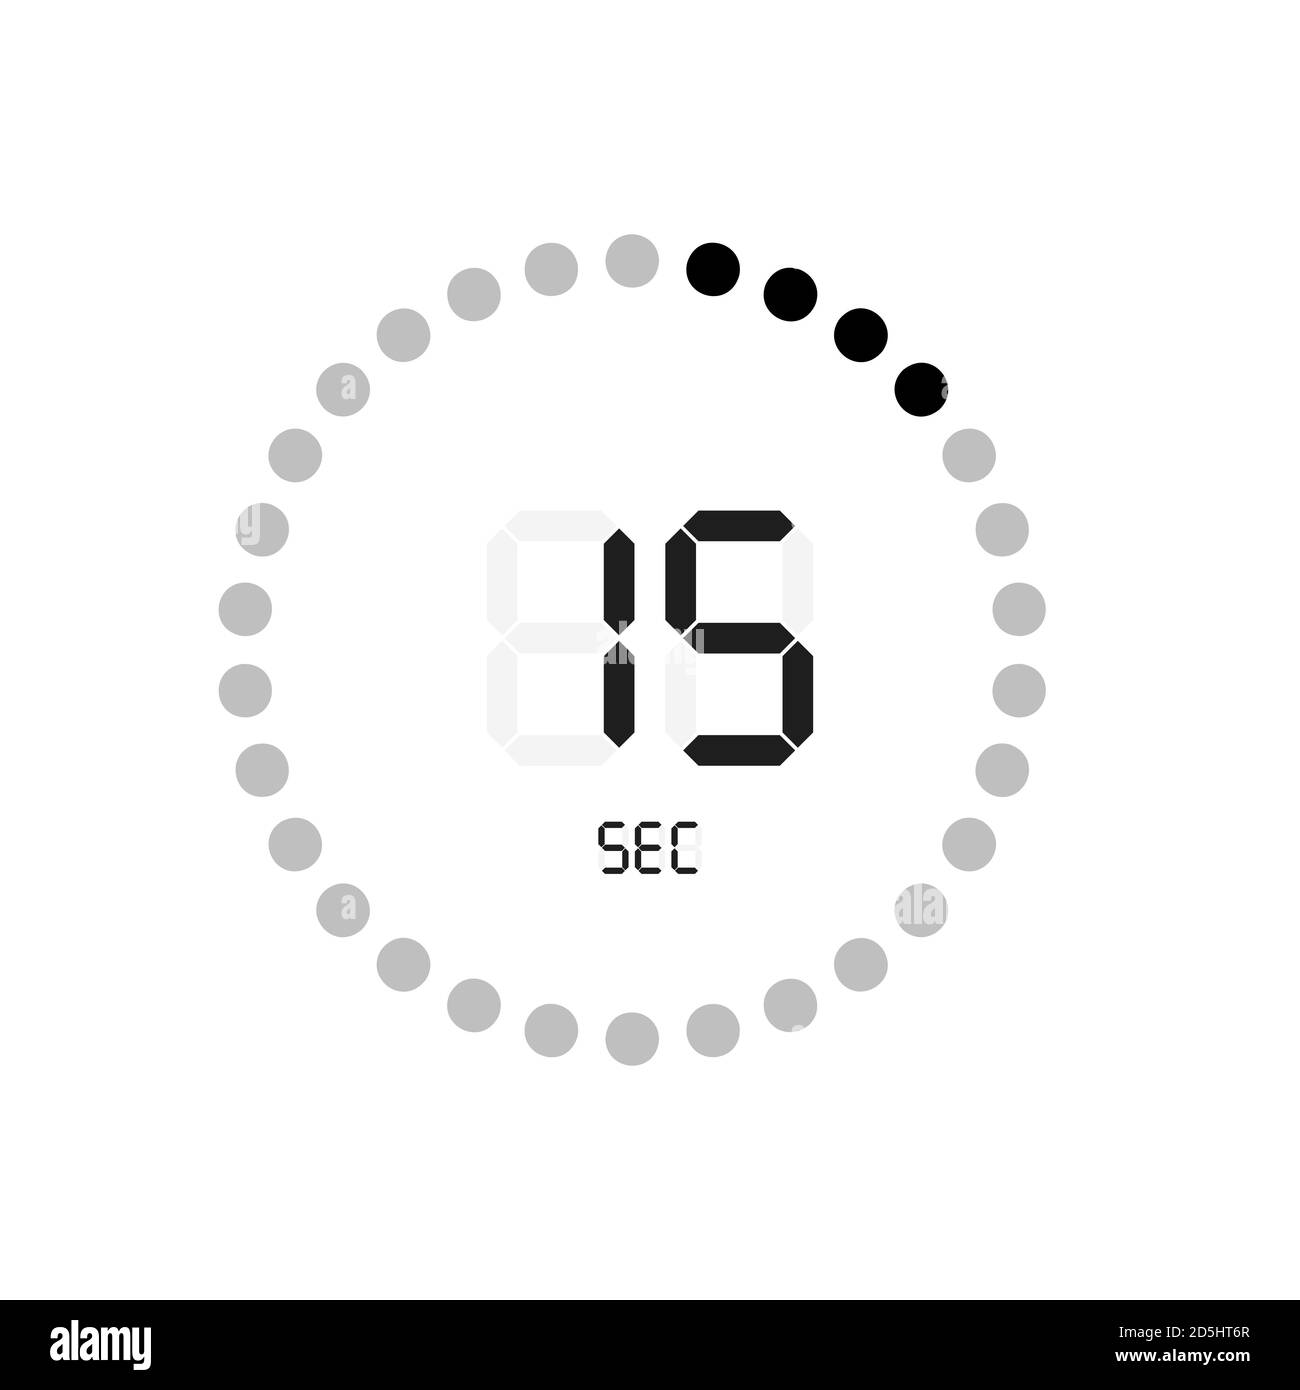 Alarm clock stock photo. Image of analog, timer, watch - 51288154